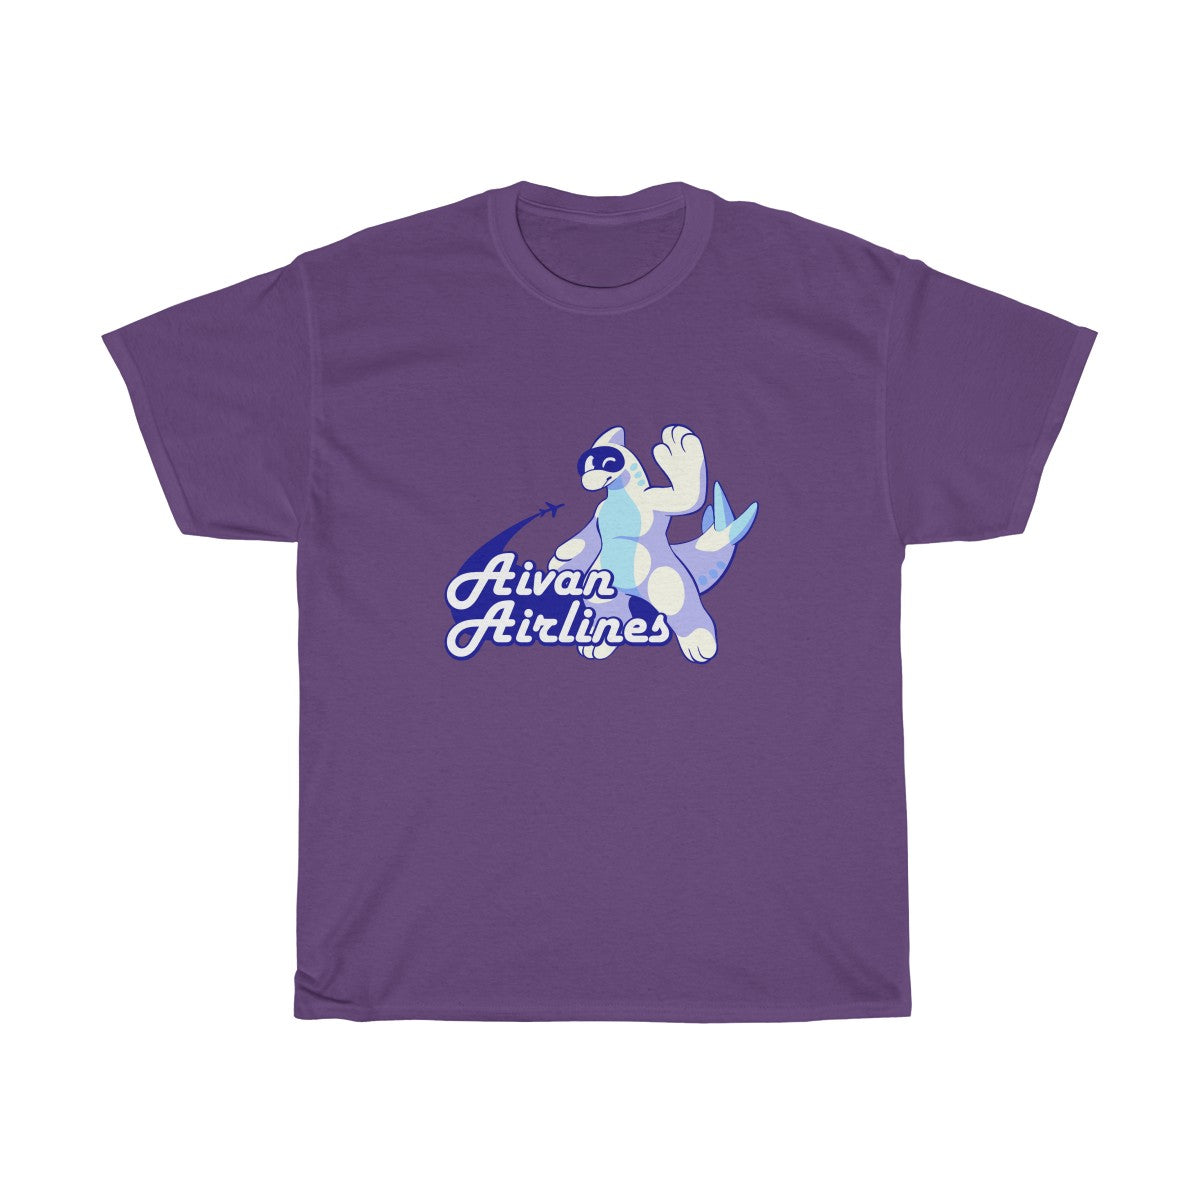 Avian Airlines - T-Shirt T-Shirt Motfal Purple S 